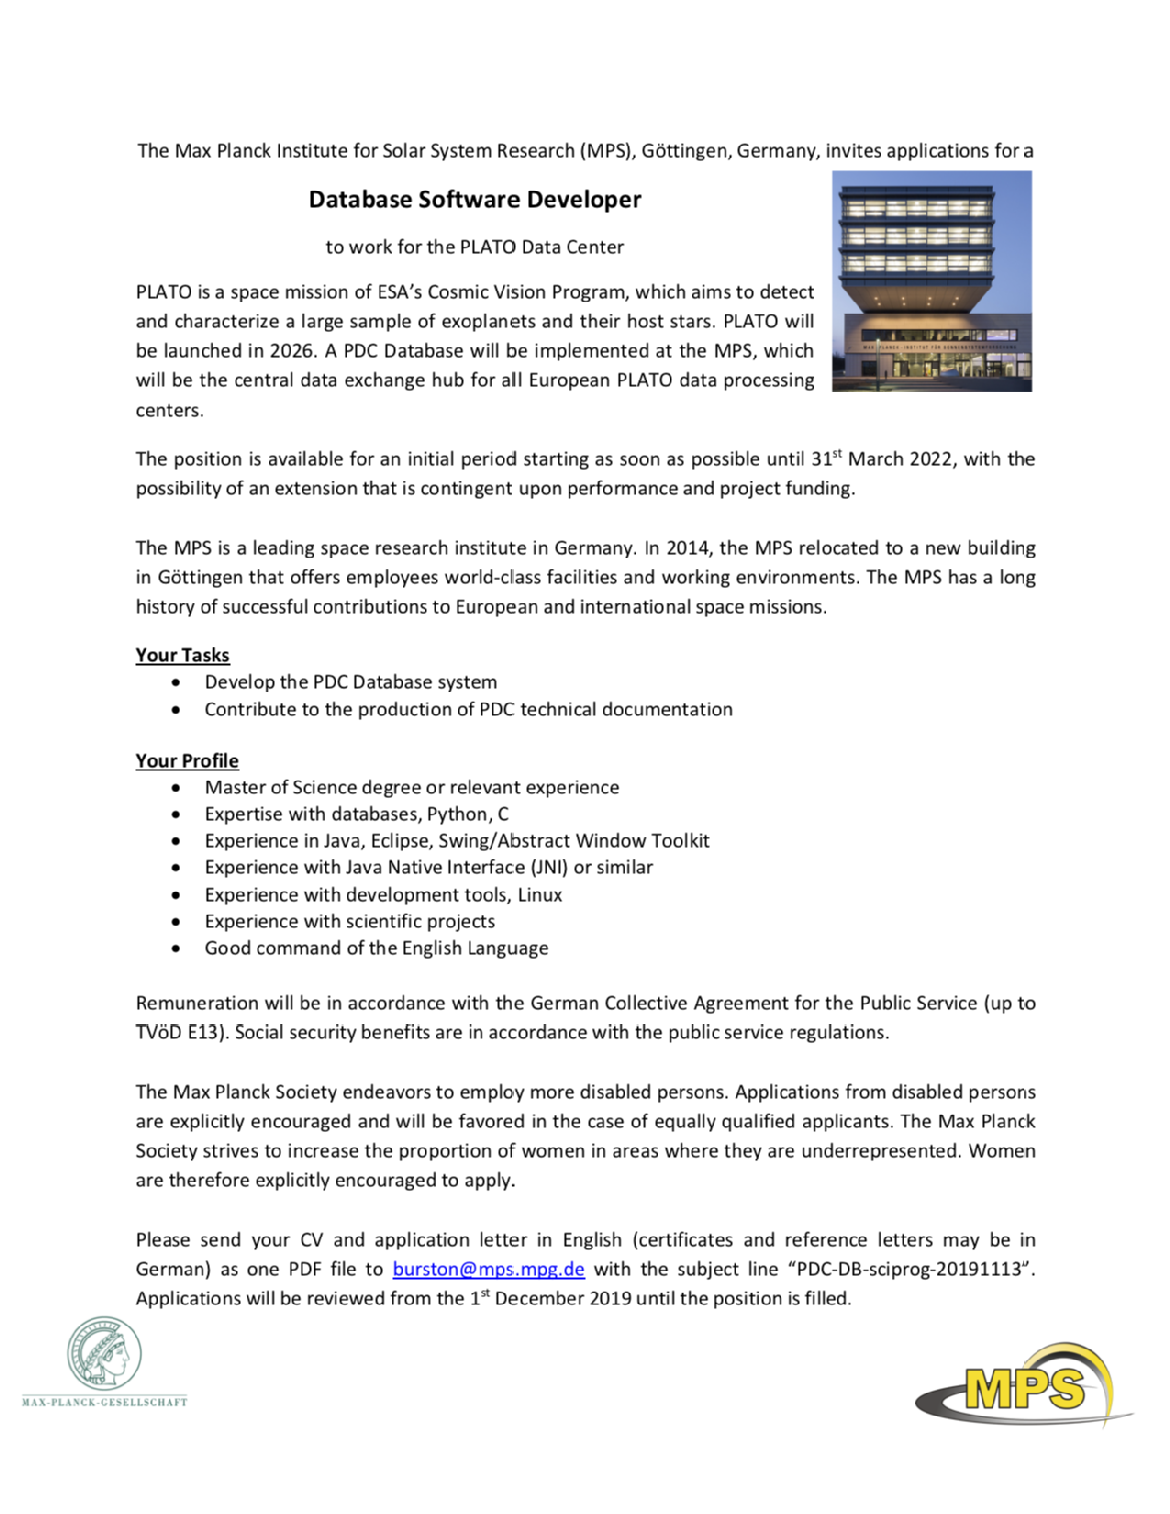 Job advert for PDC Database Software Developer.